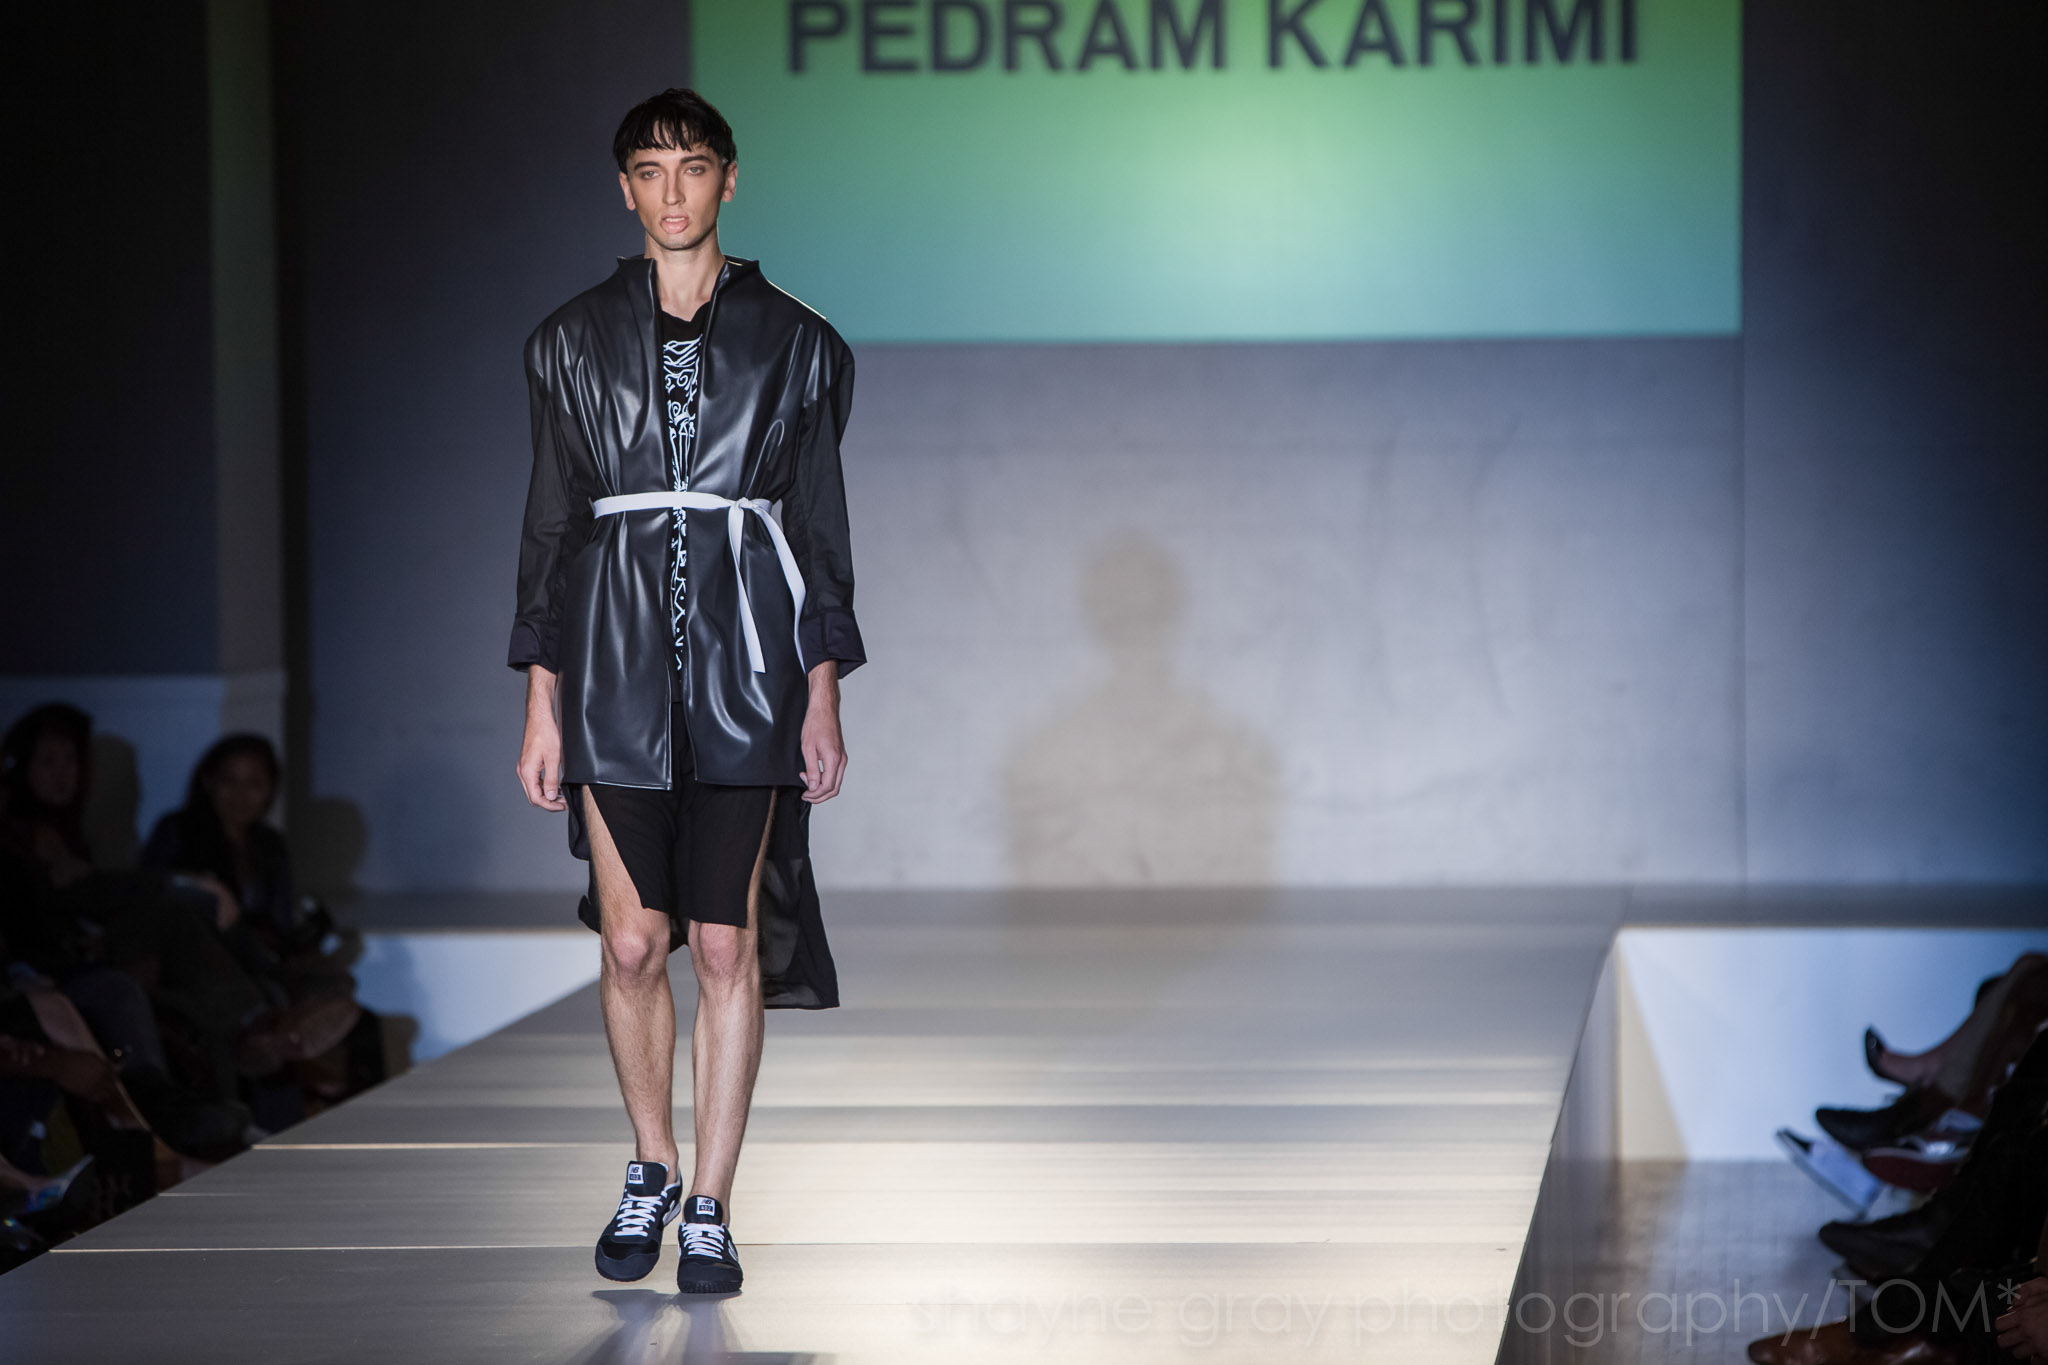 Shayne-Gray-Toronto-men's-fashion_week-TOM-Pedram-Karimi-8855.jpg